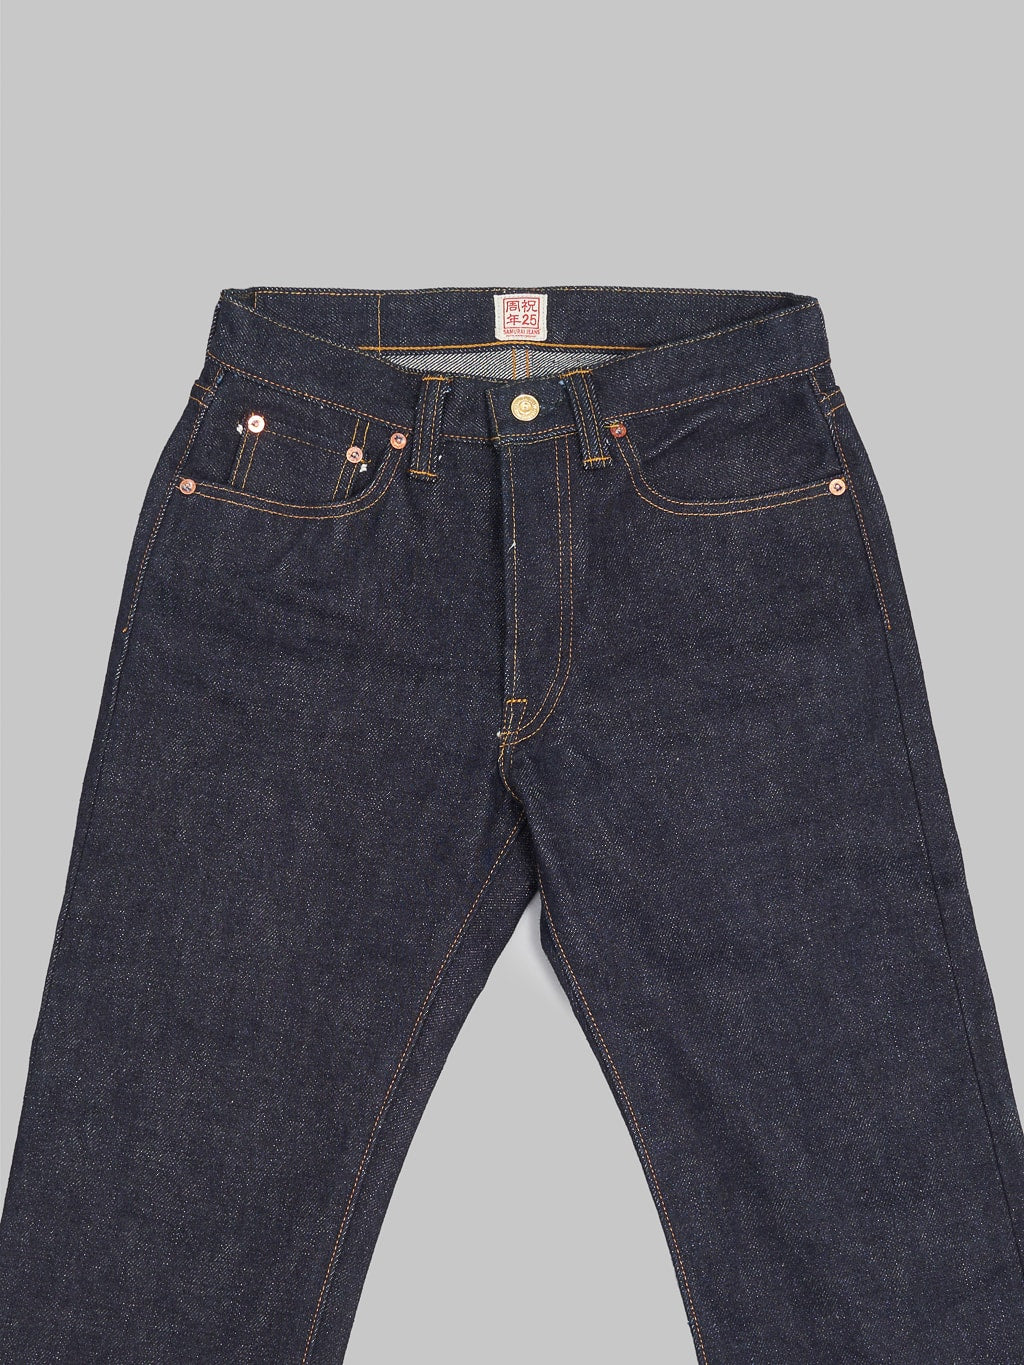 samurai jeans s710xx 25oz 25th anniversary selvedge jeans waist